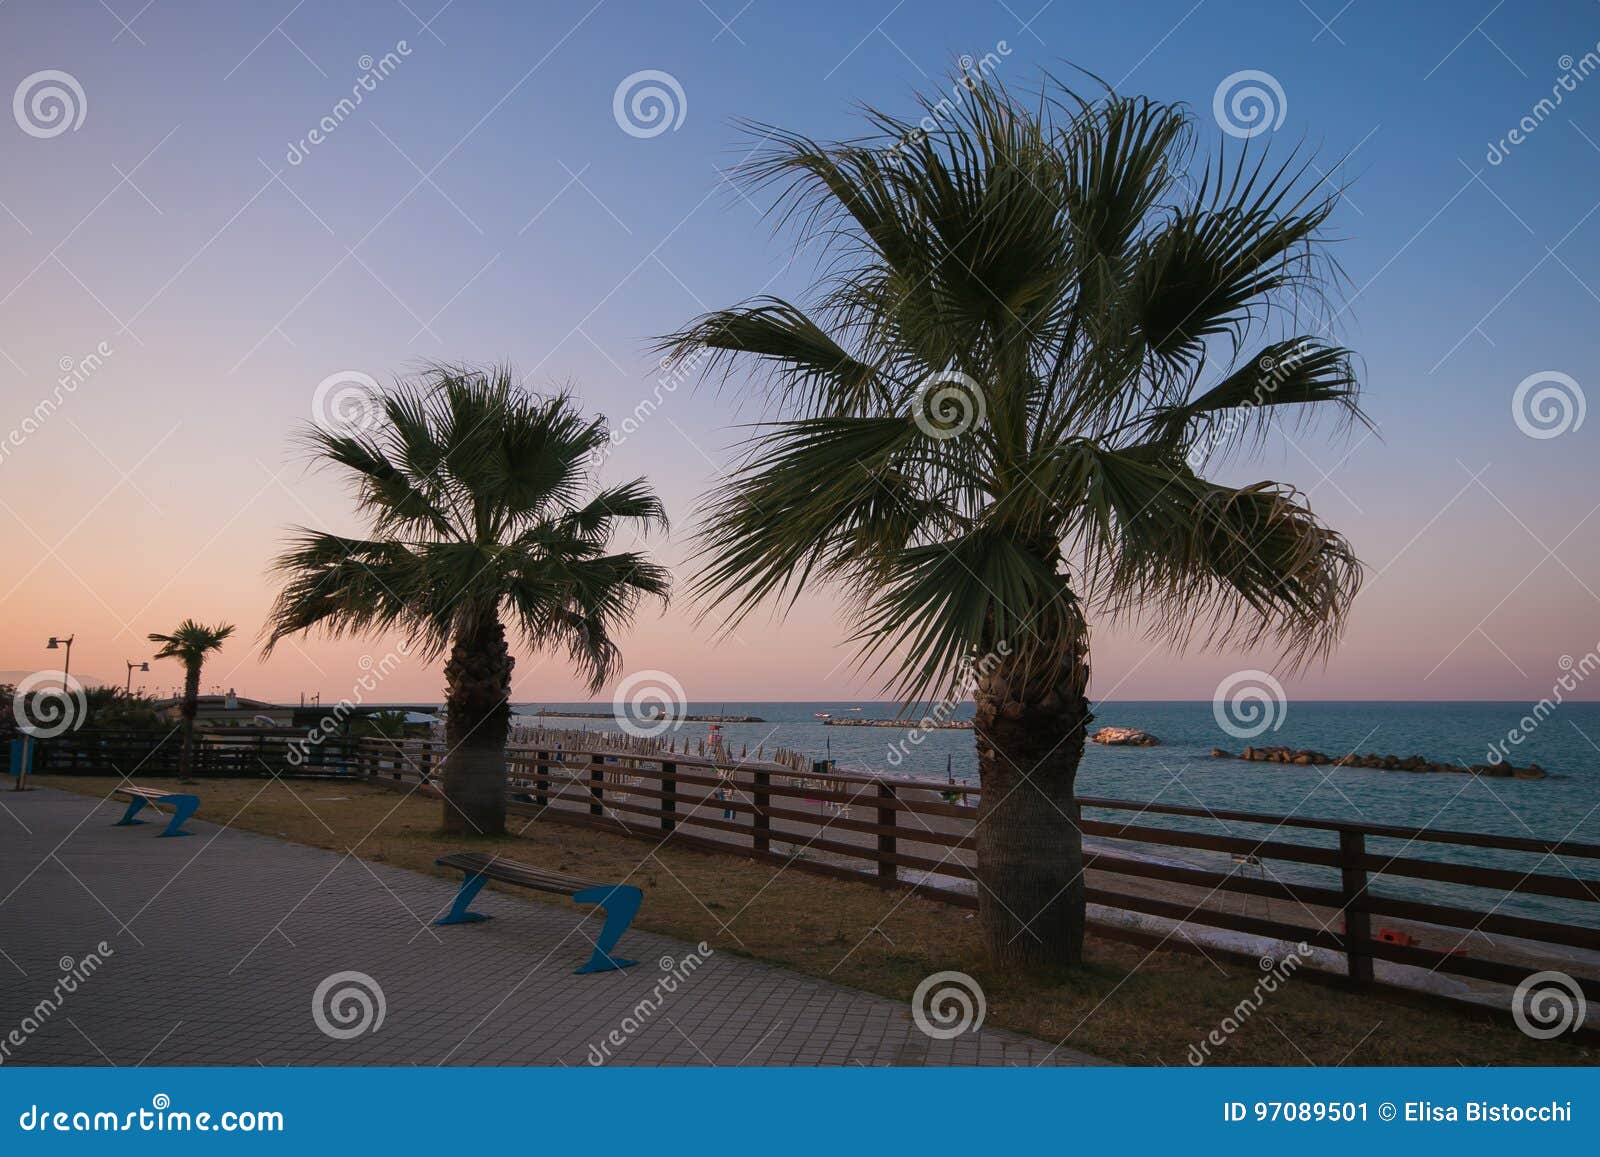 scenery of potenza picena seaside at sunset